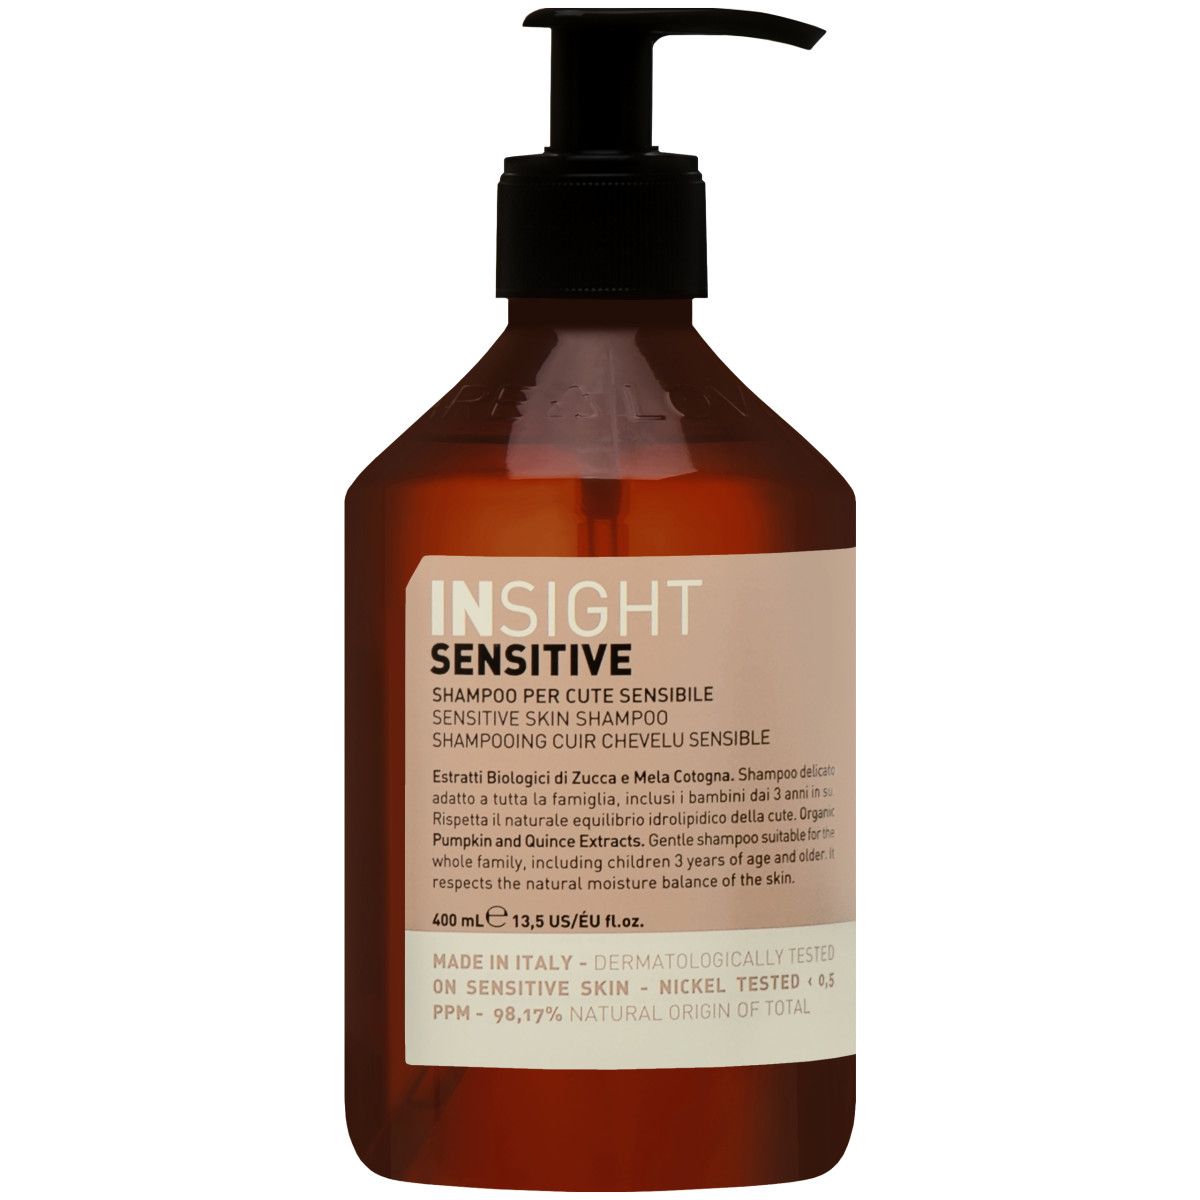 Insight Sensitive Shampoo - szampon do skóry głowy skłonnej do podrażnień, 400ml